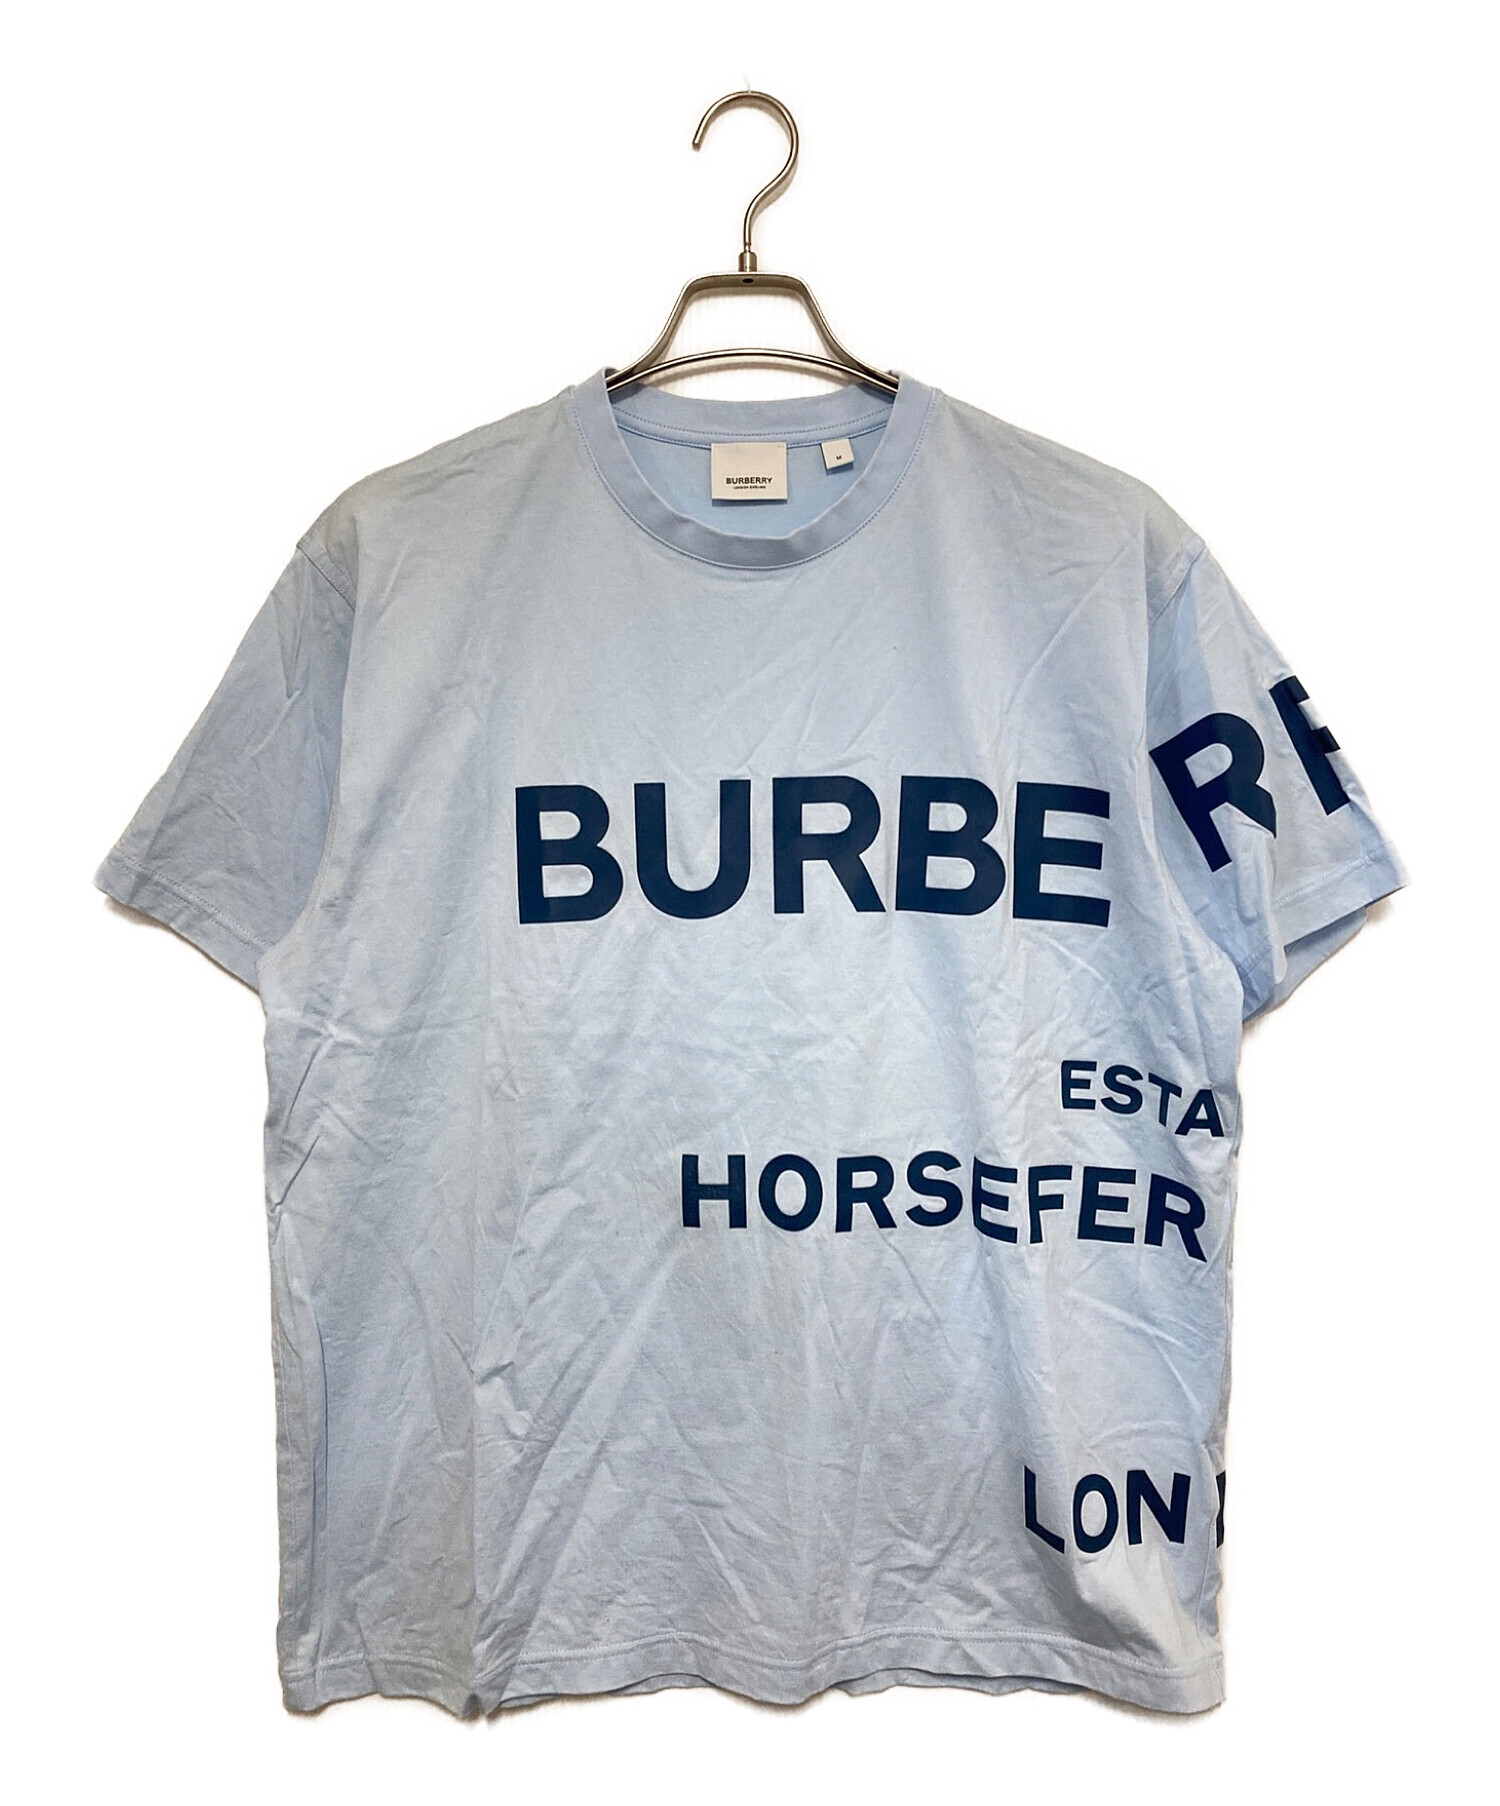 BURBERRY LONDON (バーバリー ロンドン) HORSEFERRY PRINT COTTON OVERSIZED T-SHIRT /  ホースフェリープリント コットン オーバーサイズTシャツ スカイブルー サイズ:M